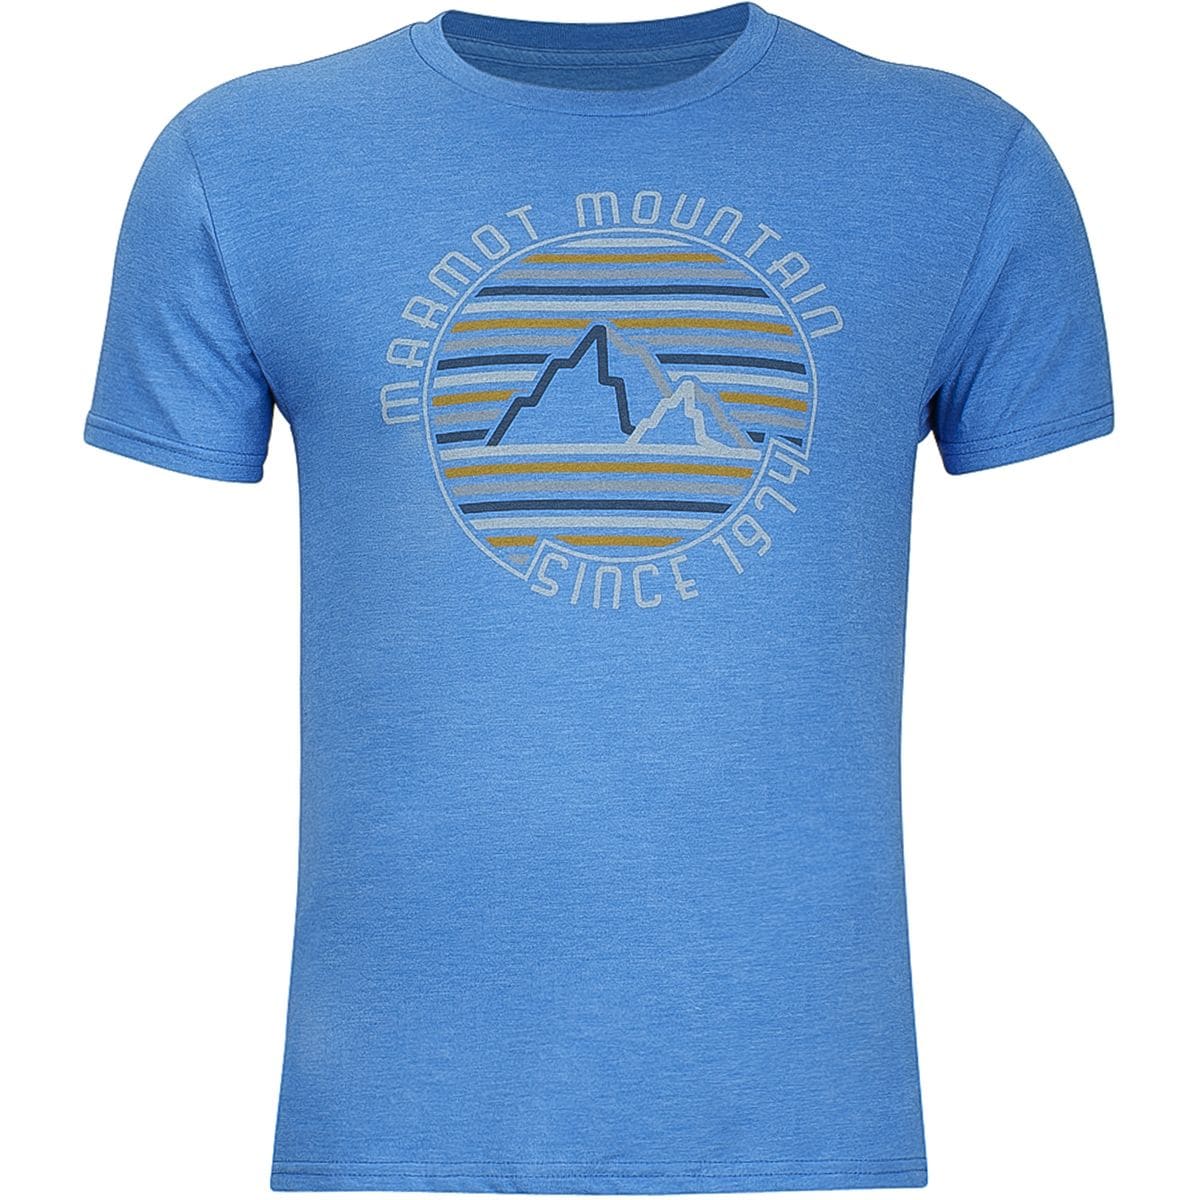 Marmot Men's T-Shirts, stylish comfort clothing